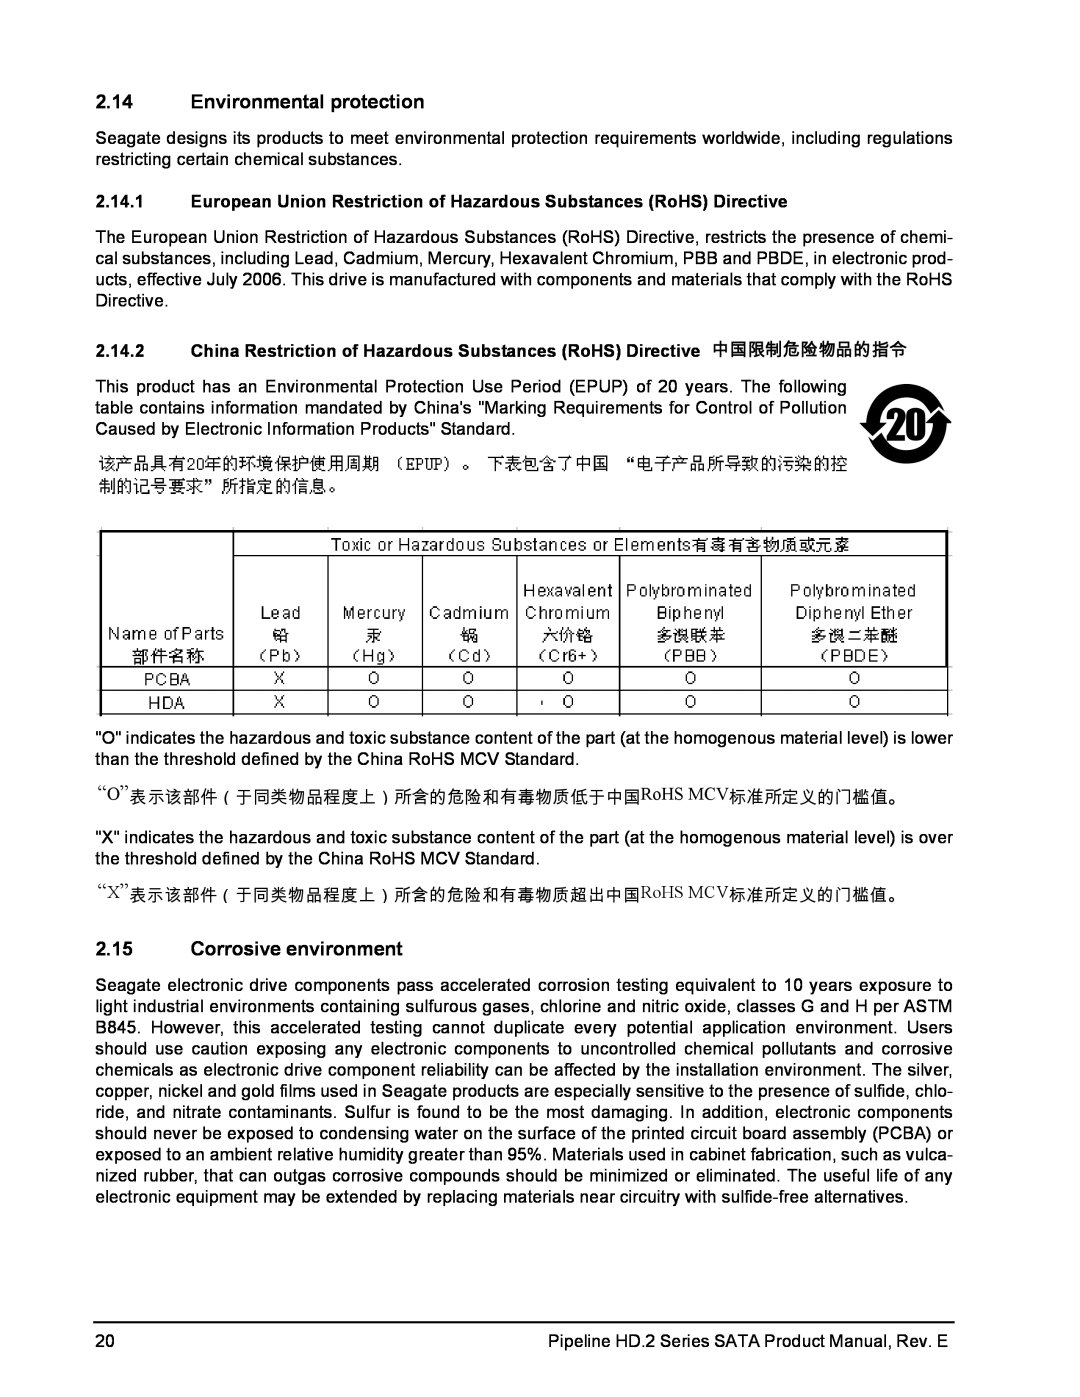 Seagate ST3500312CS Environmental protection, Corrosive environment, “O”表示该部件（于同类物品程度上）所含的危险和有毒物质低于中国RoHS MCV标准所定义的门槛值。 